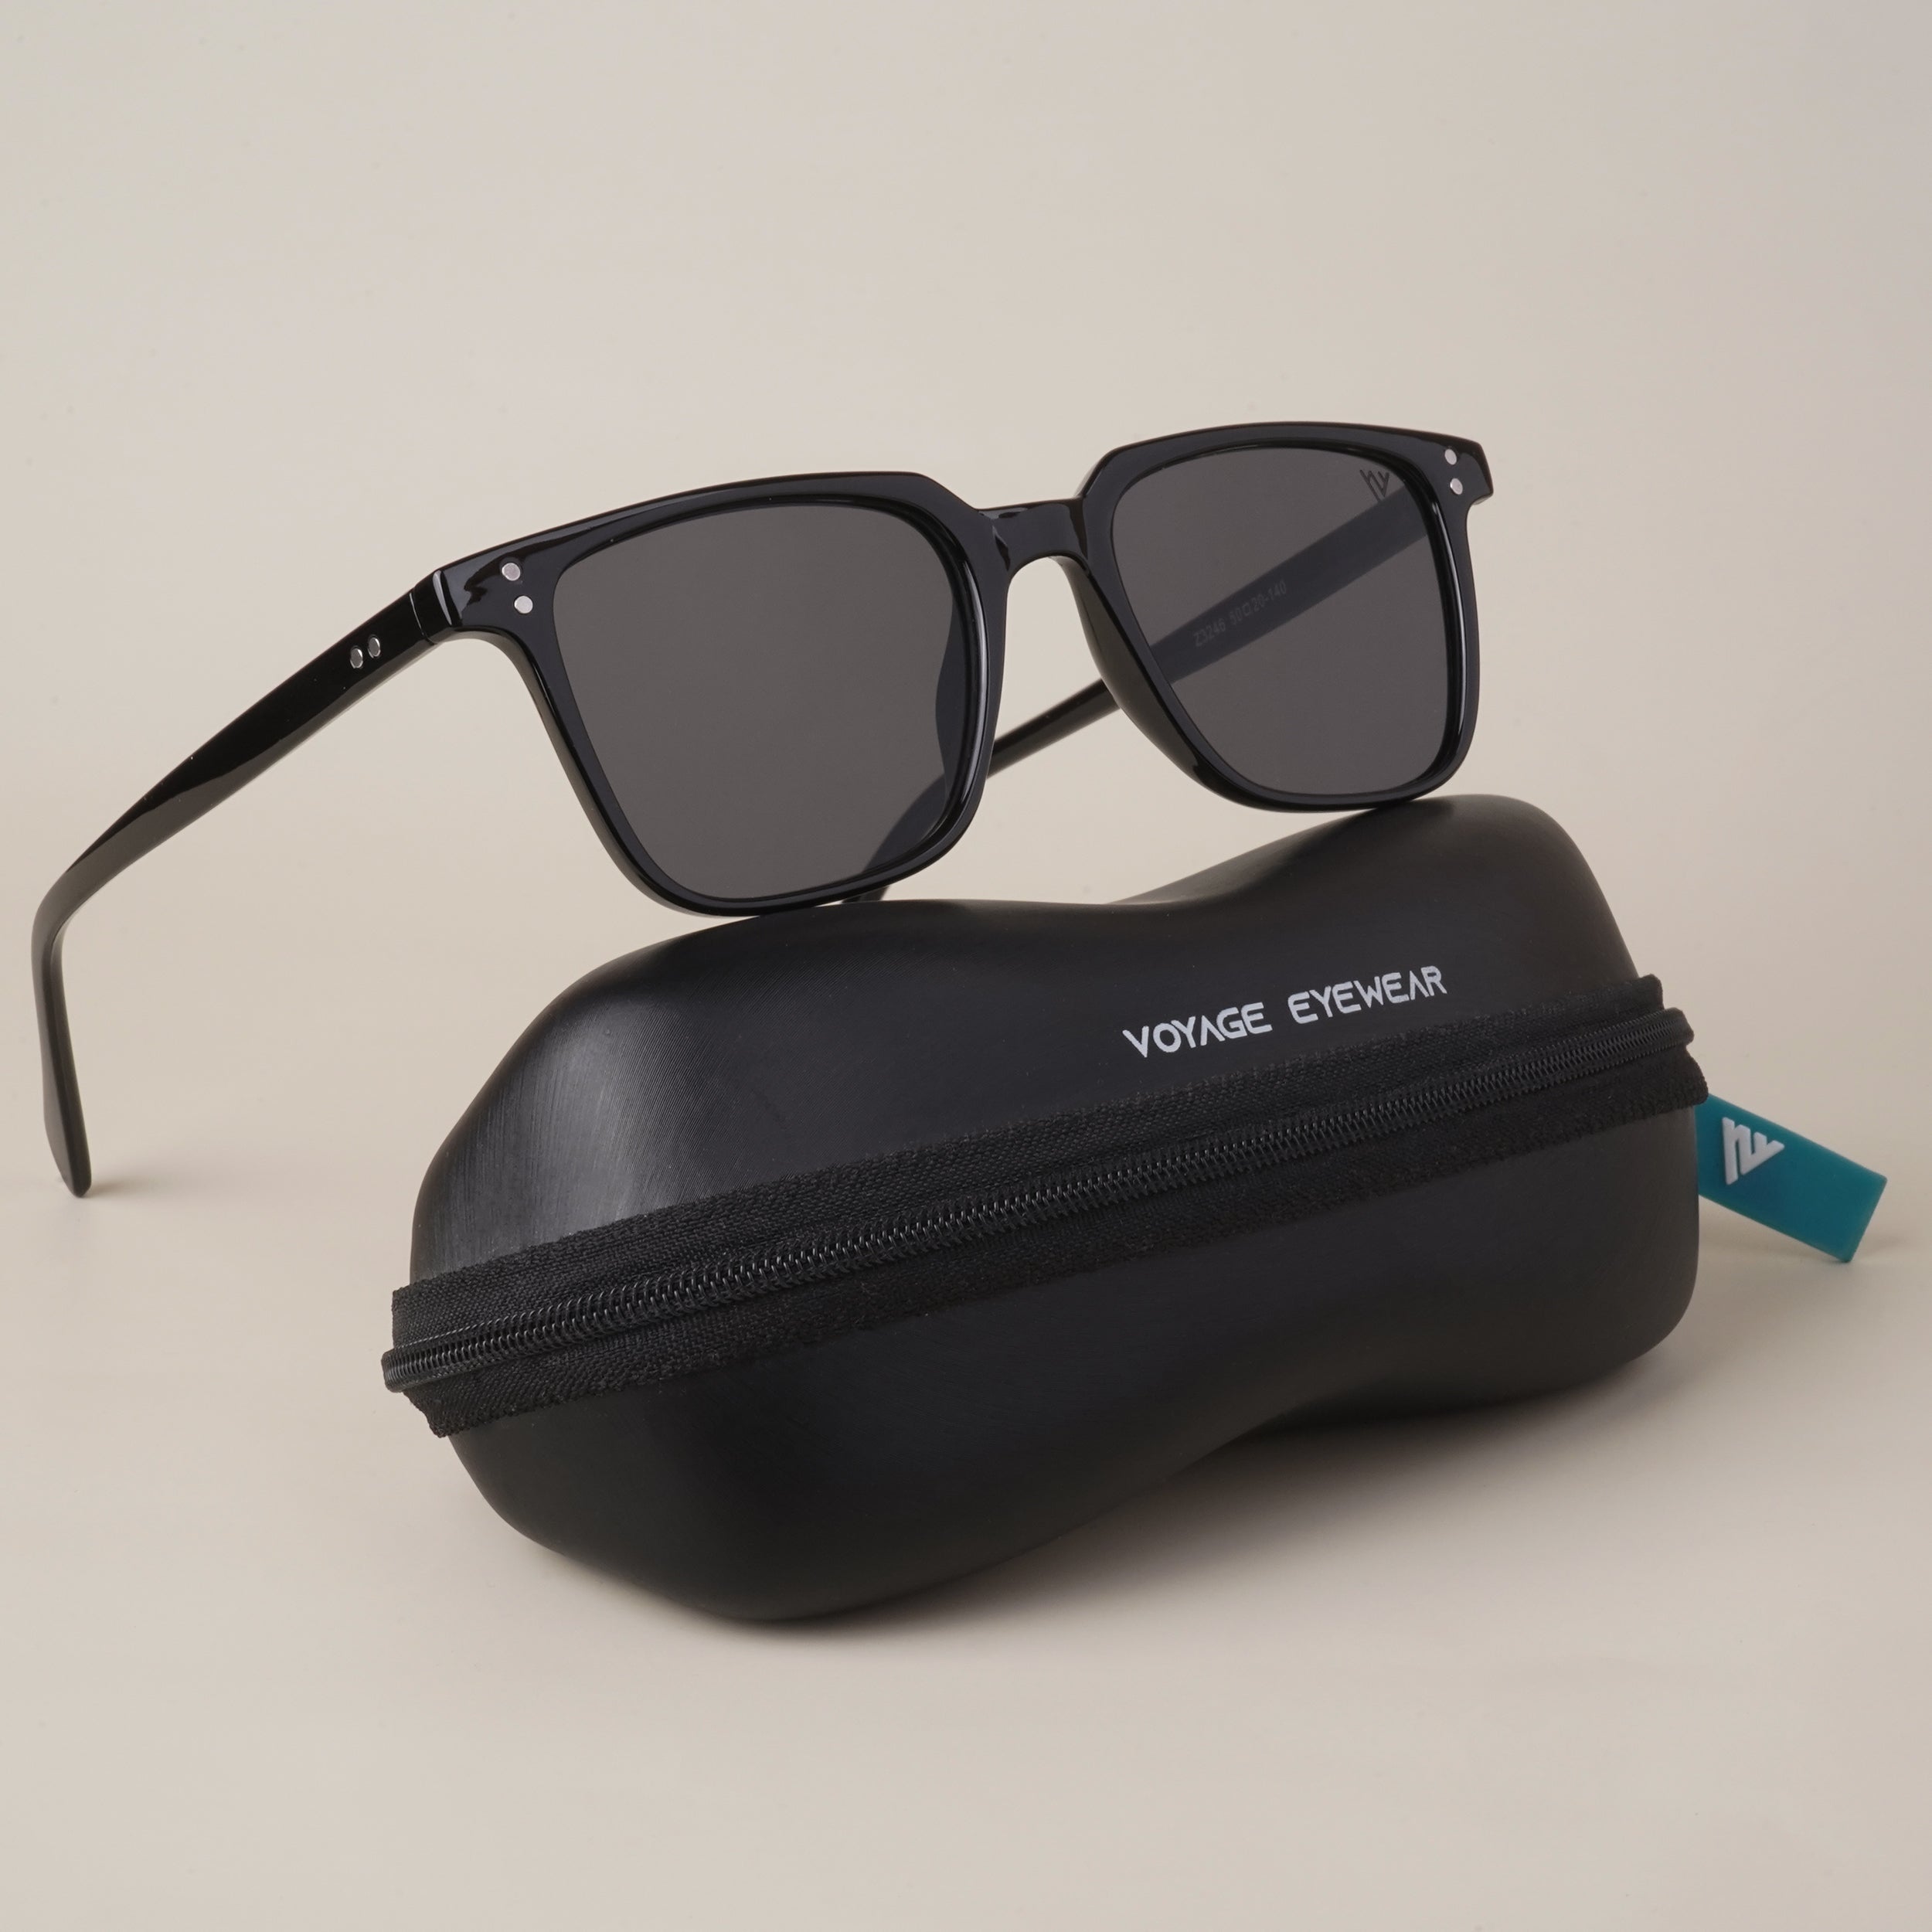 Voyage Black Wayfarer Sunglasses for Men & Women - MG4125